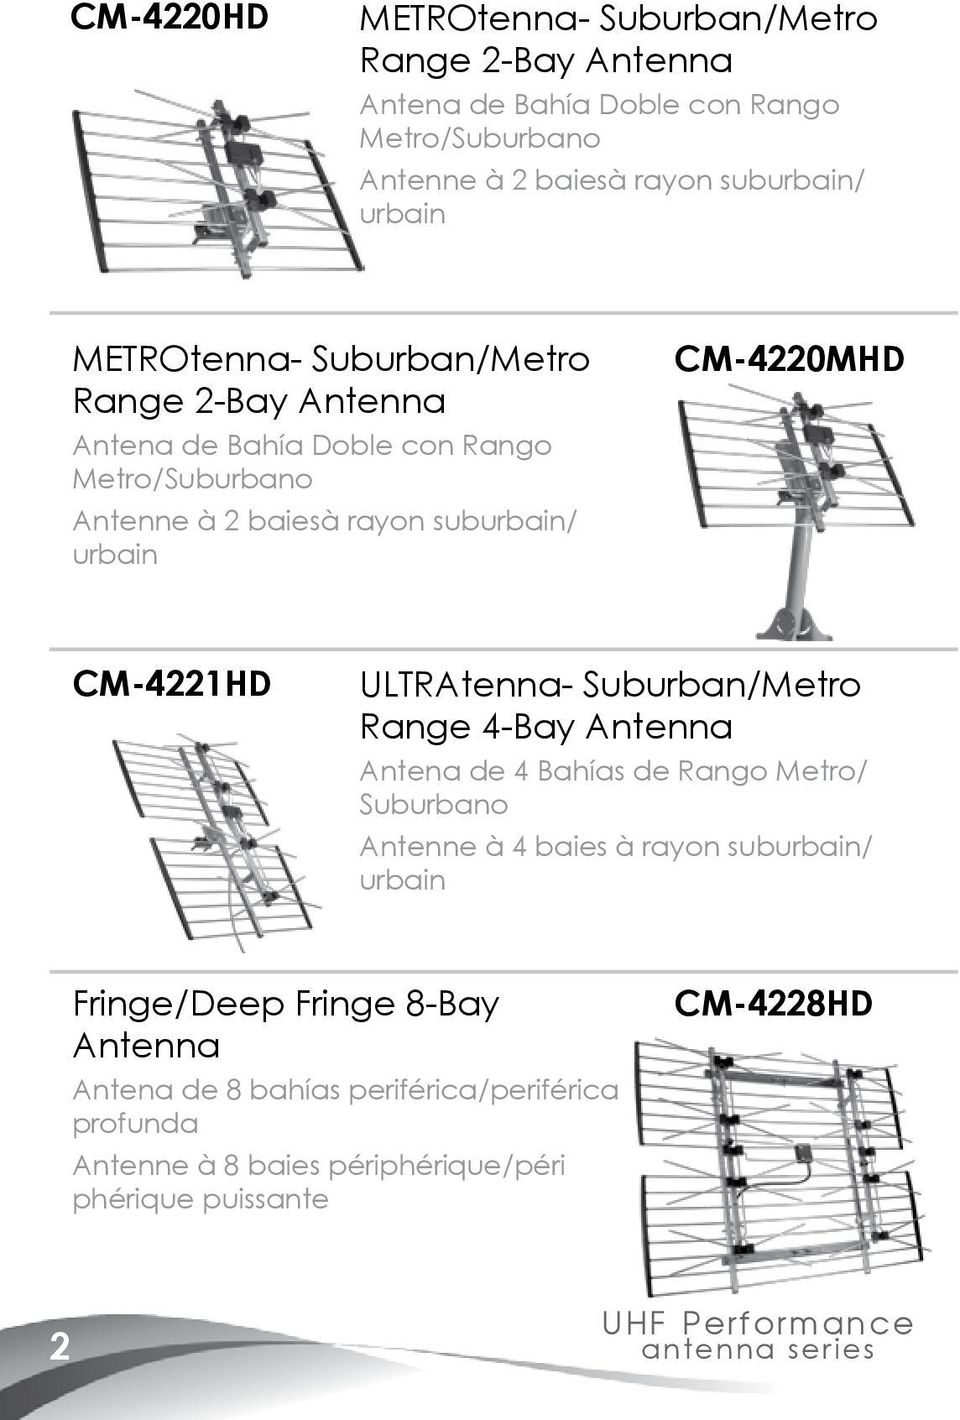 CM-4221HD ULTRAtenna- Suburban/Metro Range 4-Bay Antenna Antena de 4 Bahías de Rango Metro/ Suburbano Antenne à 4 baies à rayon suburbain/ urbain